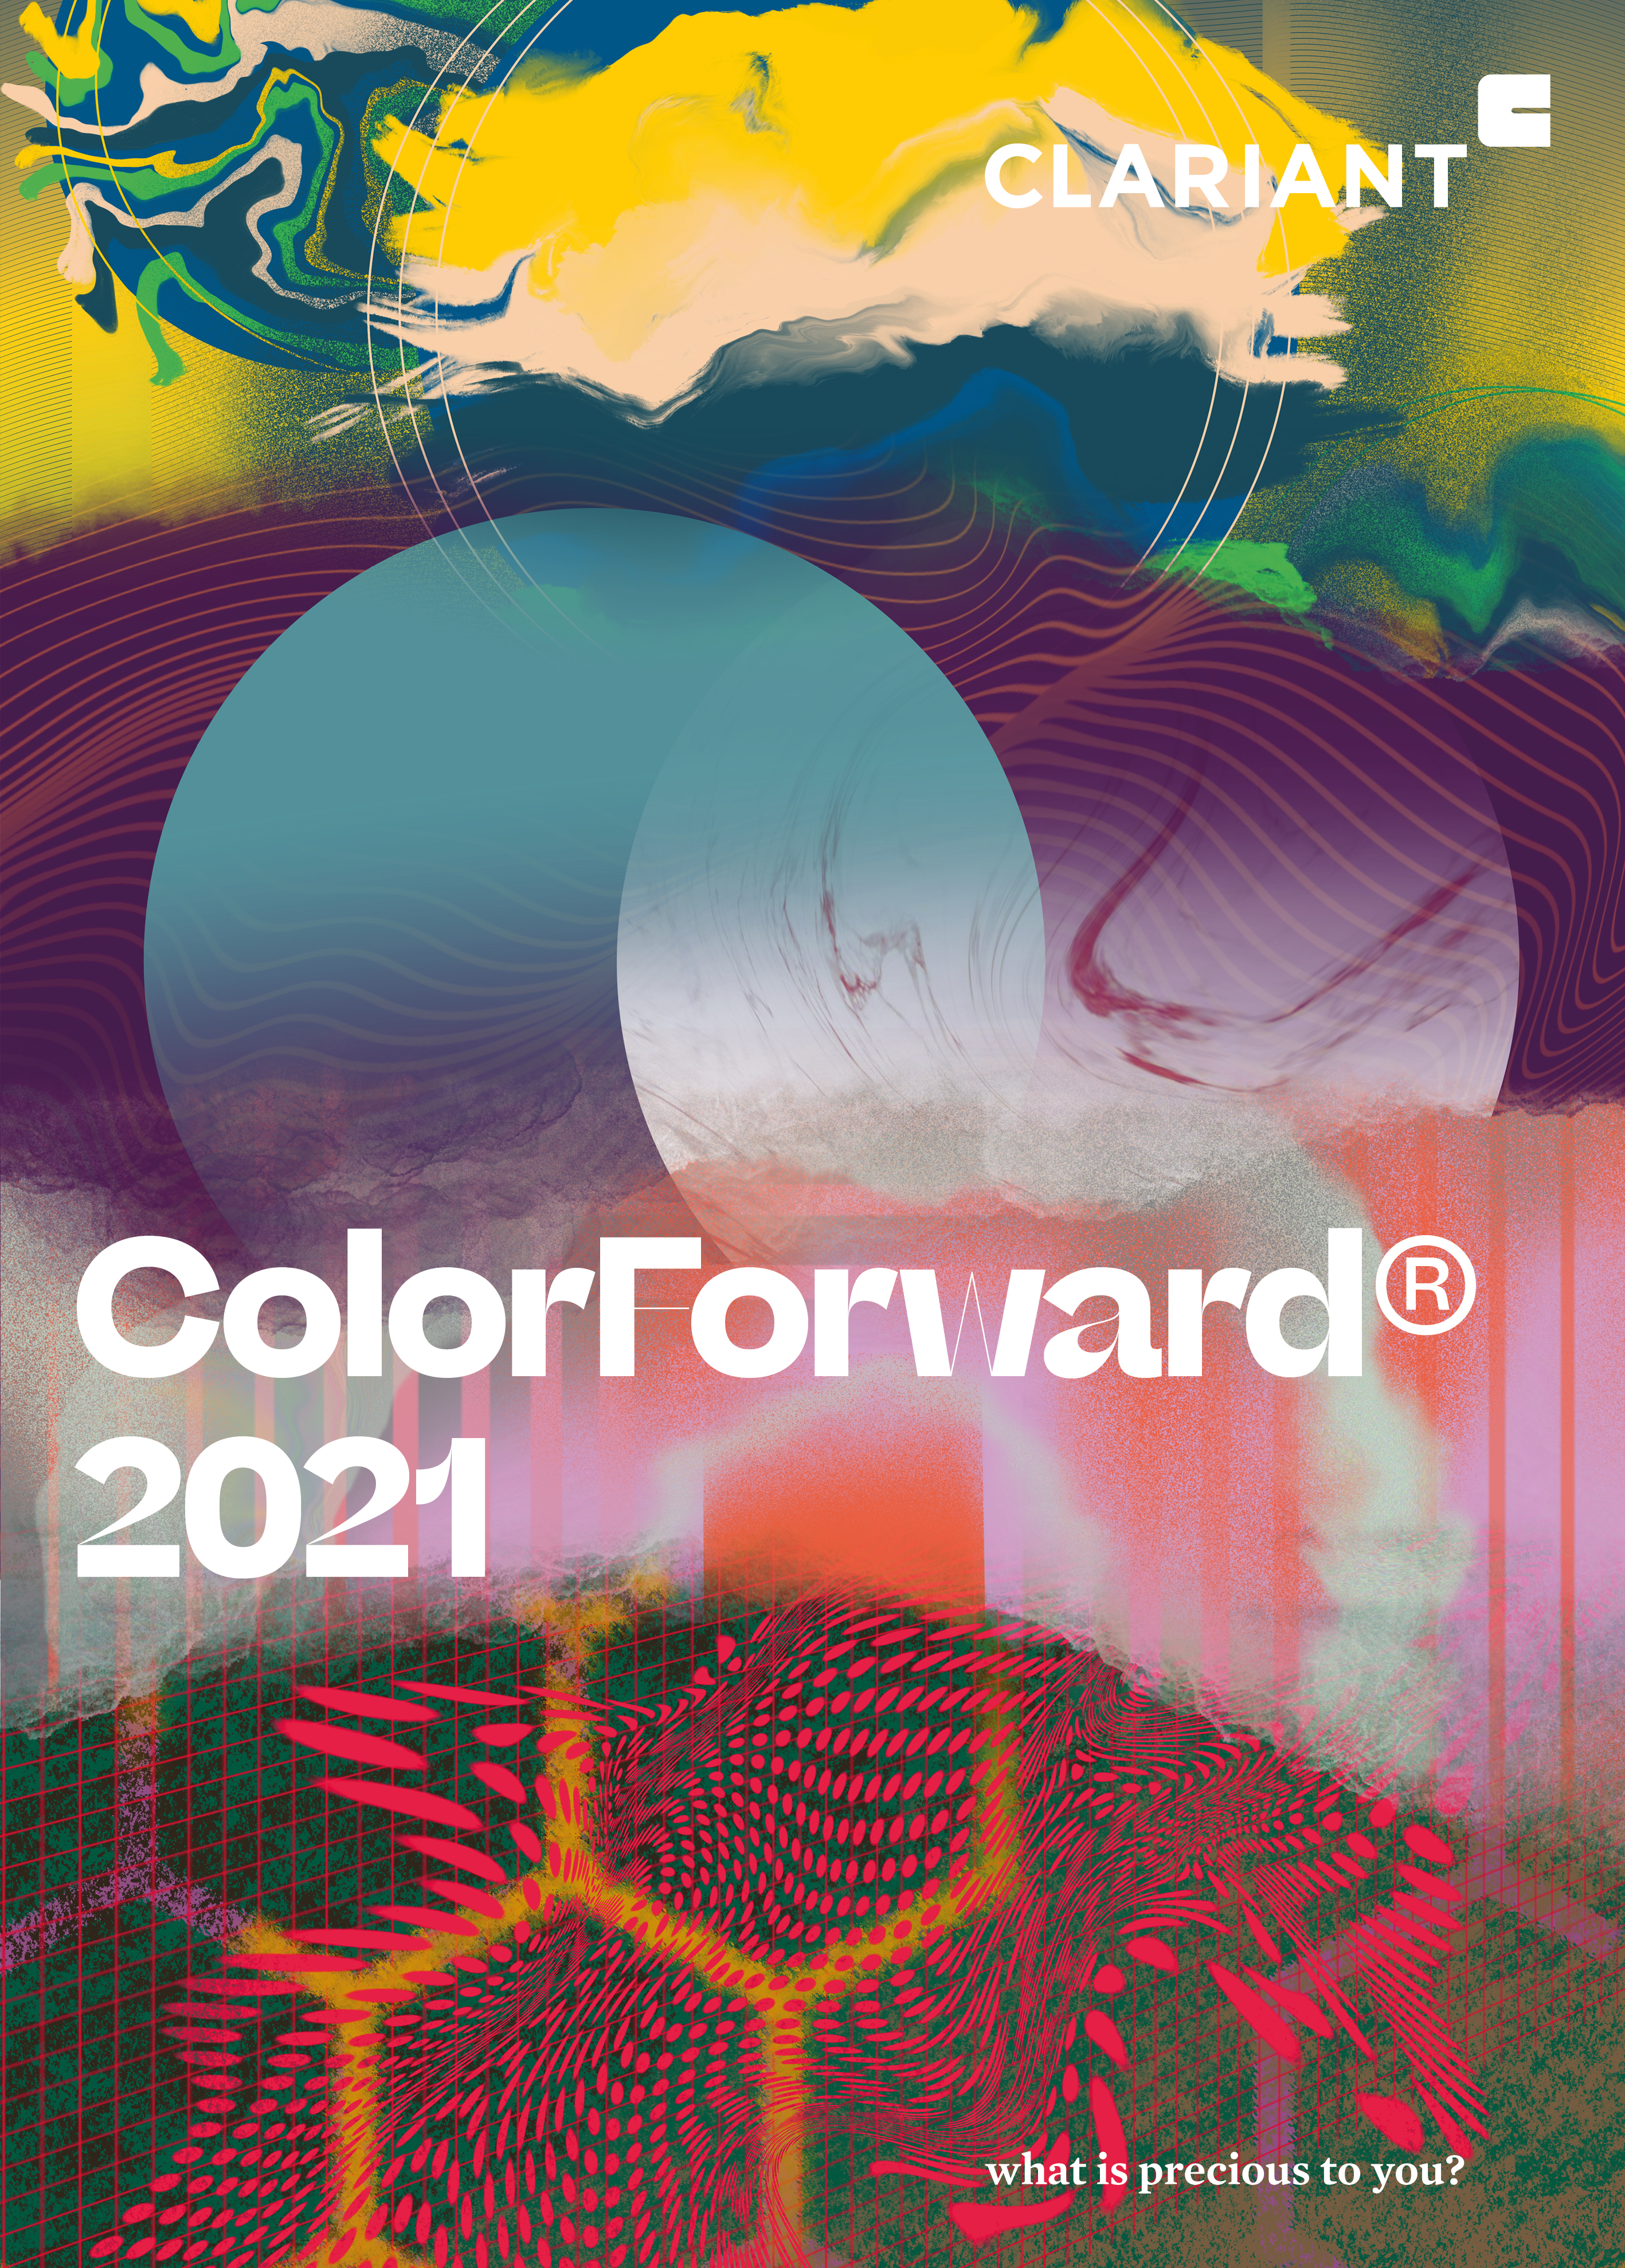 A paleta do ColorForward 2021 da Clariant mostra o desejo por contato humano e a busca de autentic...